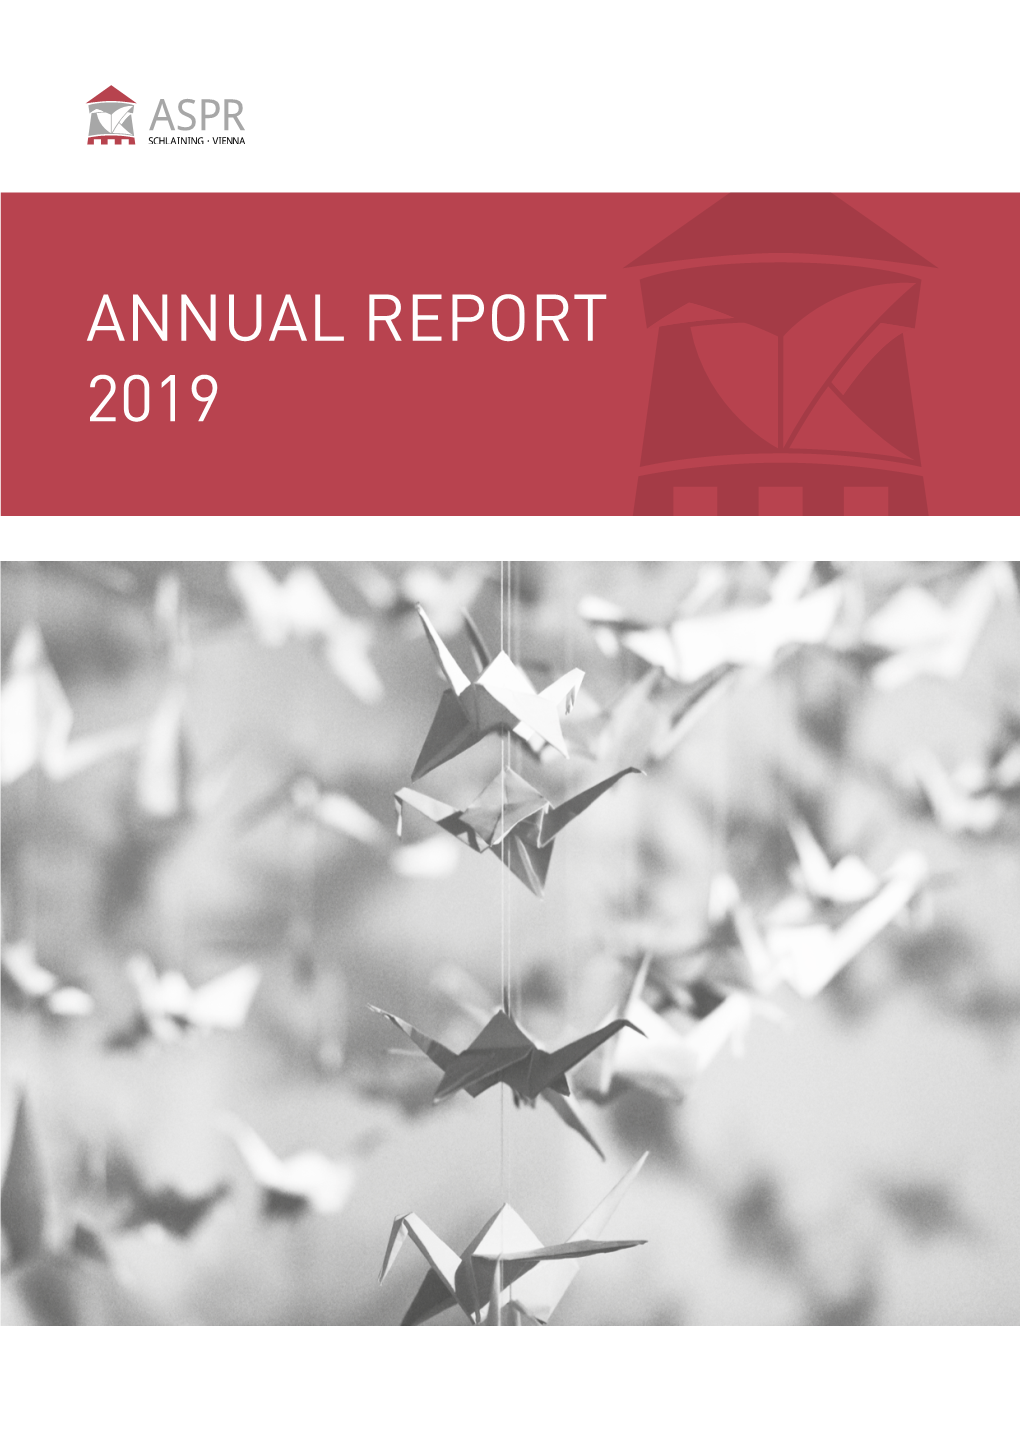 Annual Report 2019 Content